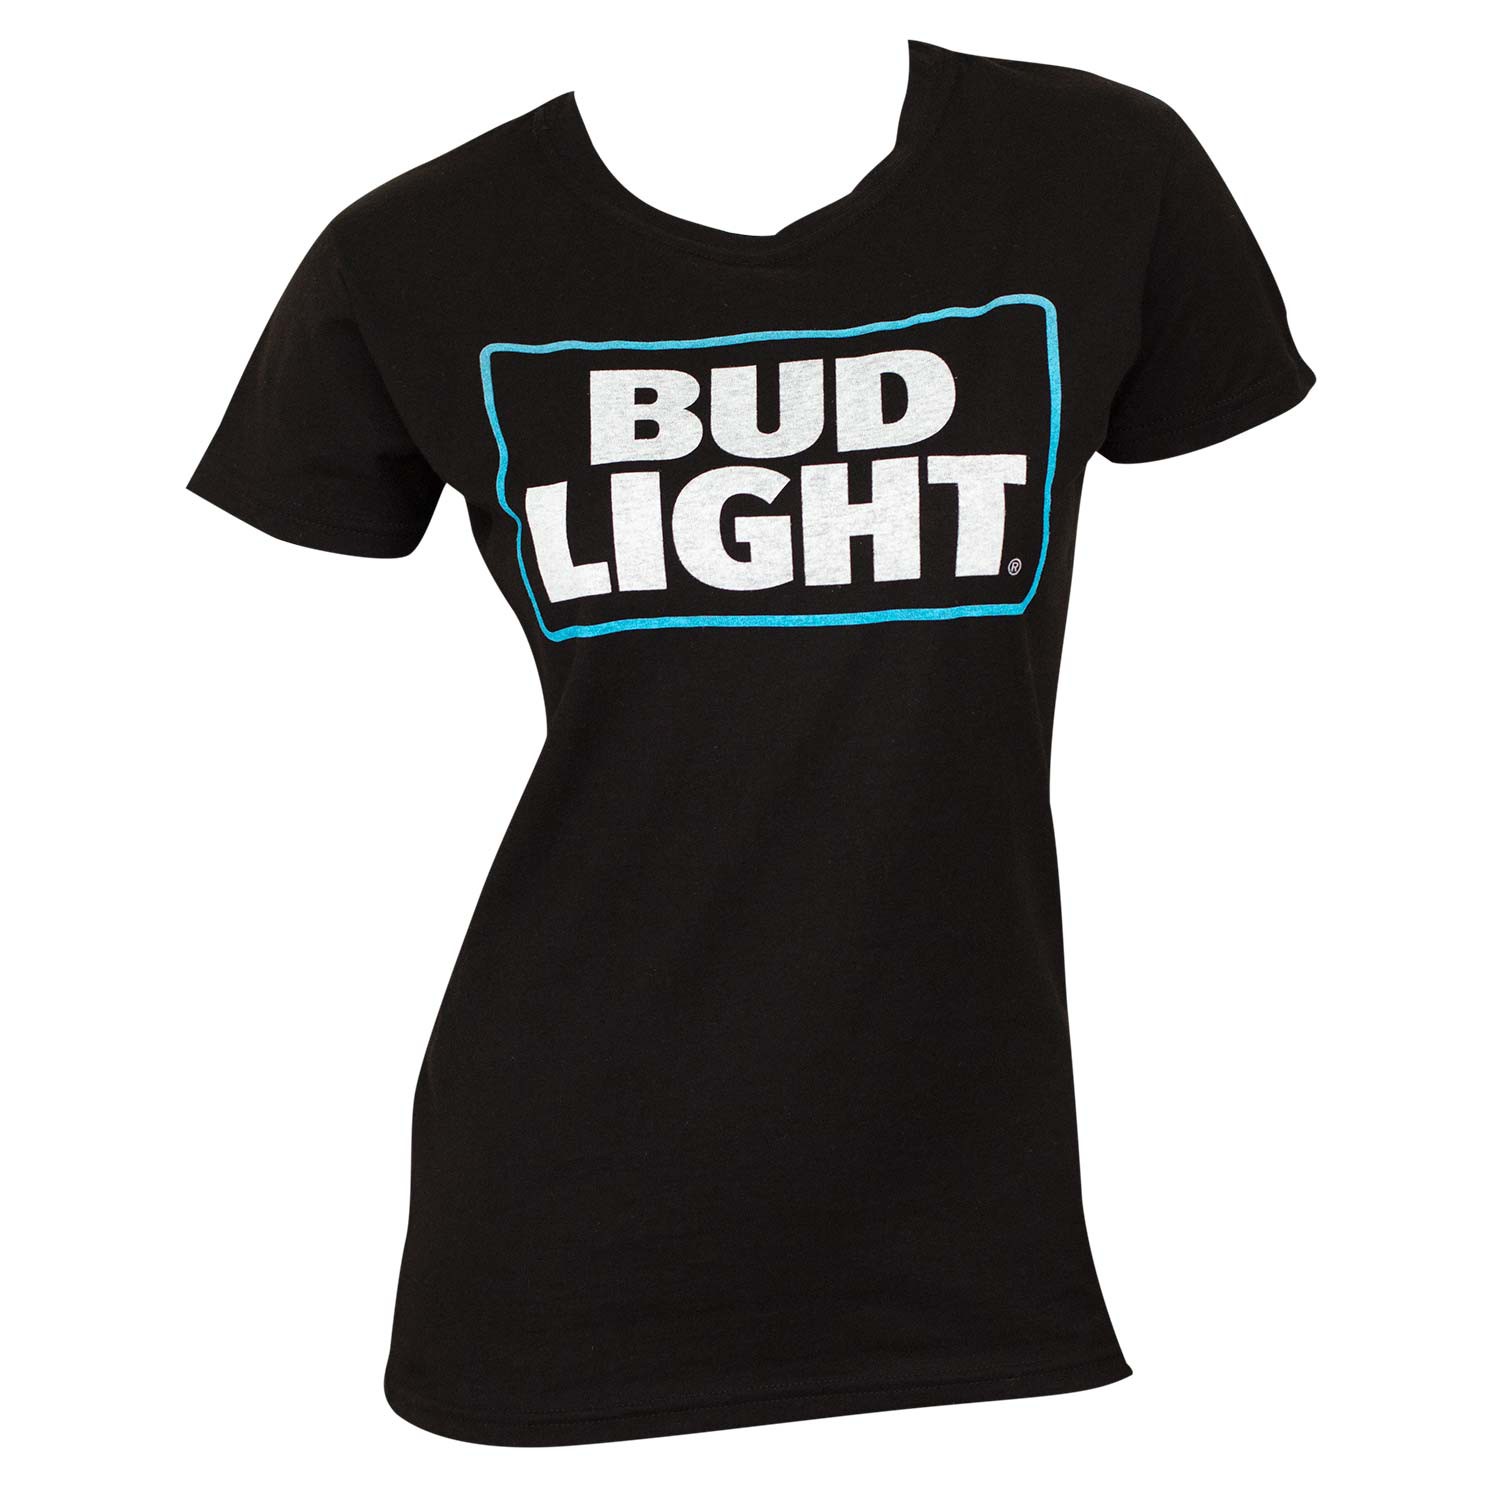 Bud Light Women's Black Tee Shirt